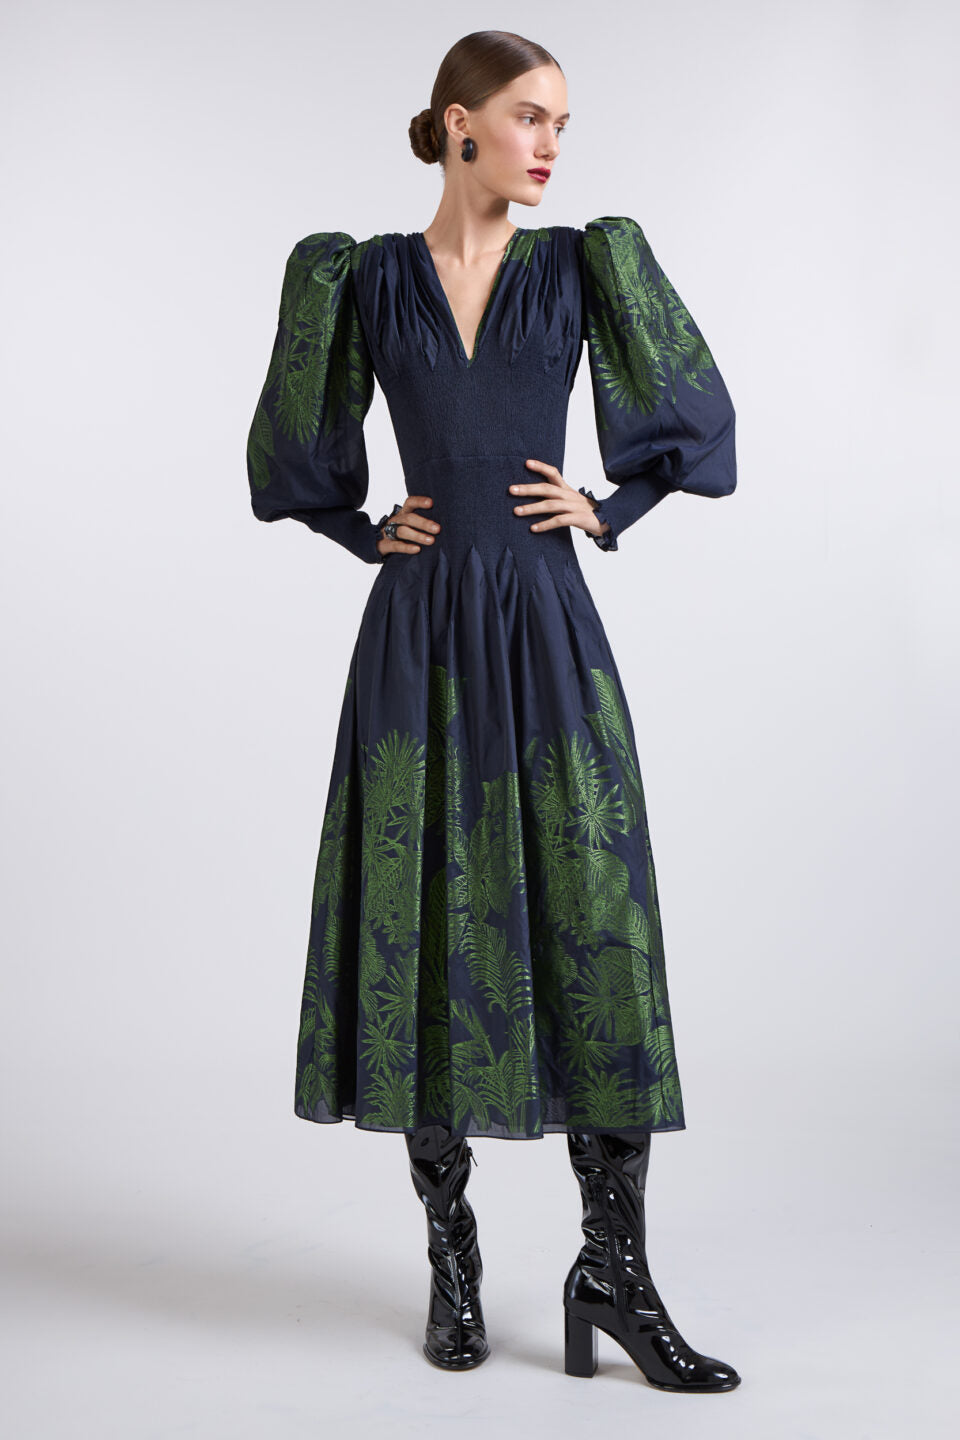 Carolina Jacquard Dress